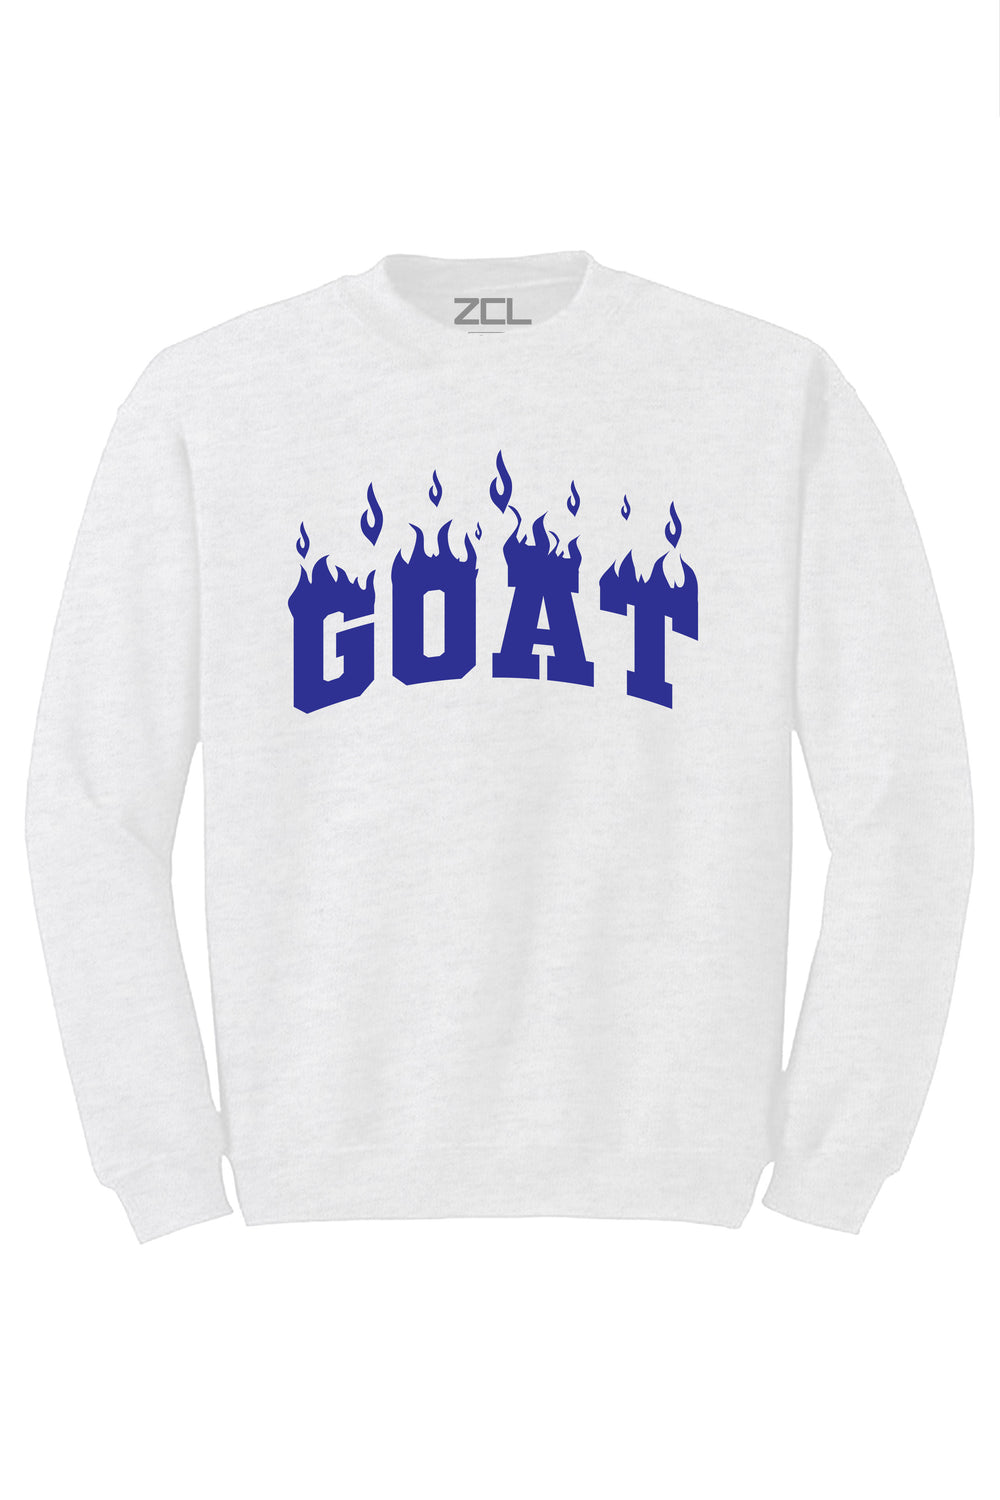 Goat Flame Crewneck Sweatshirt (Navy Logo) - Zamage